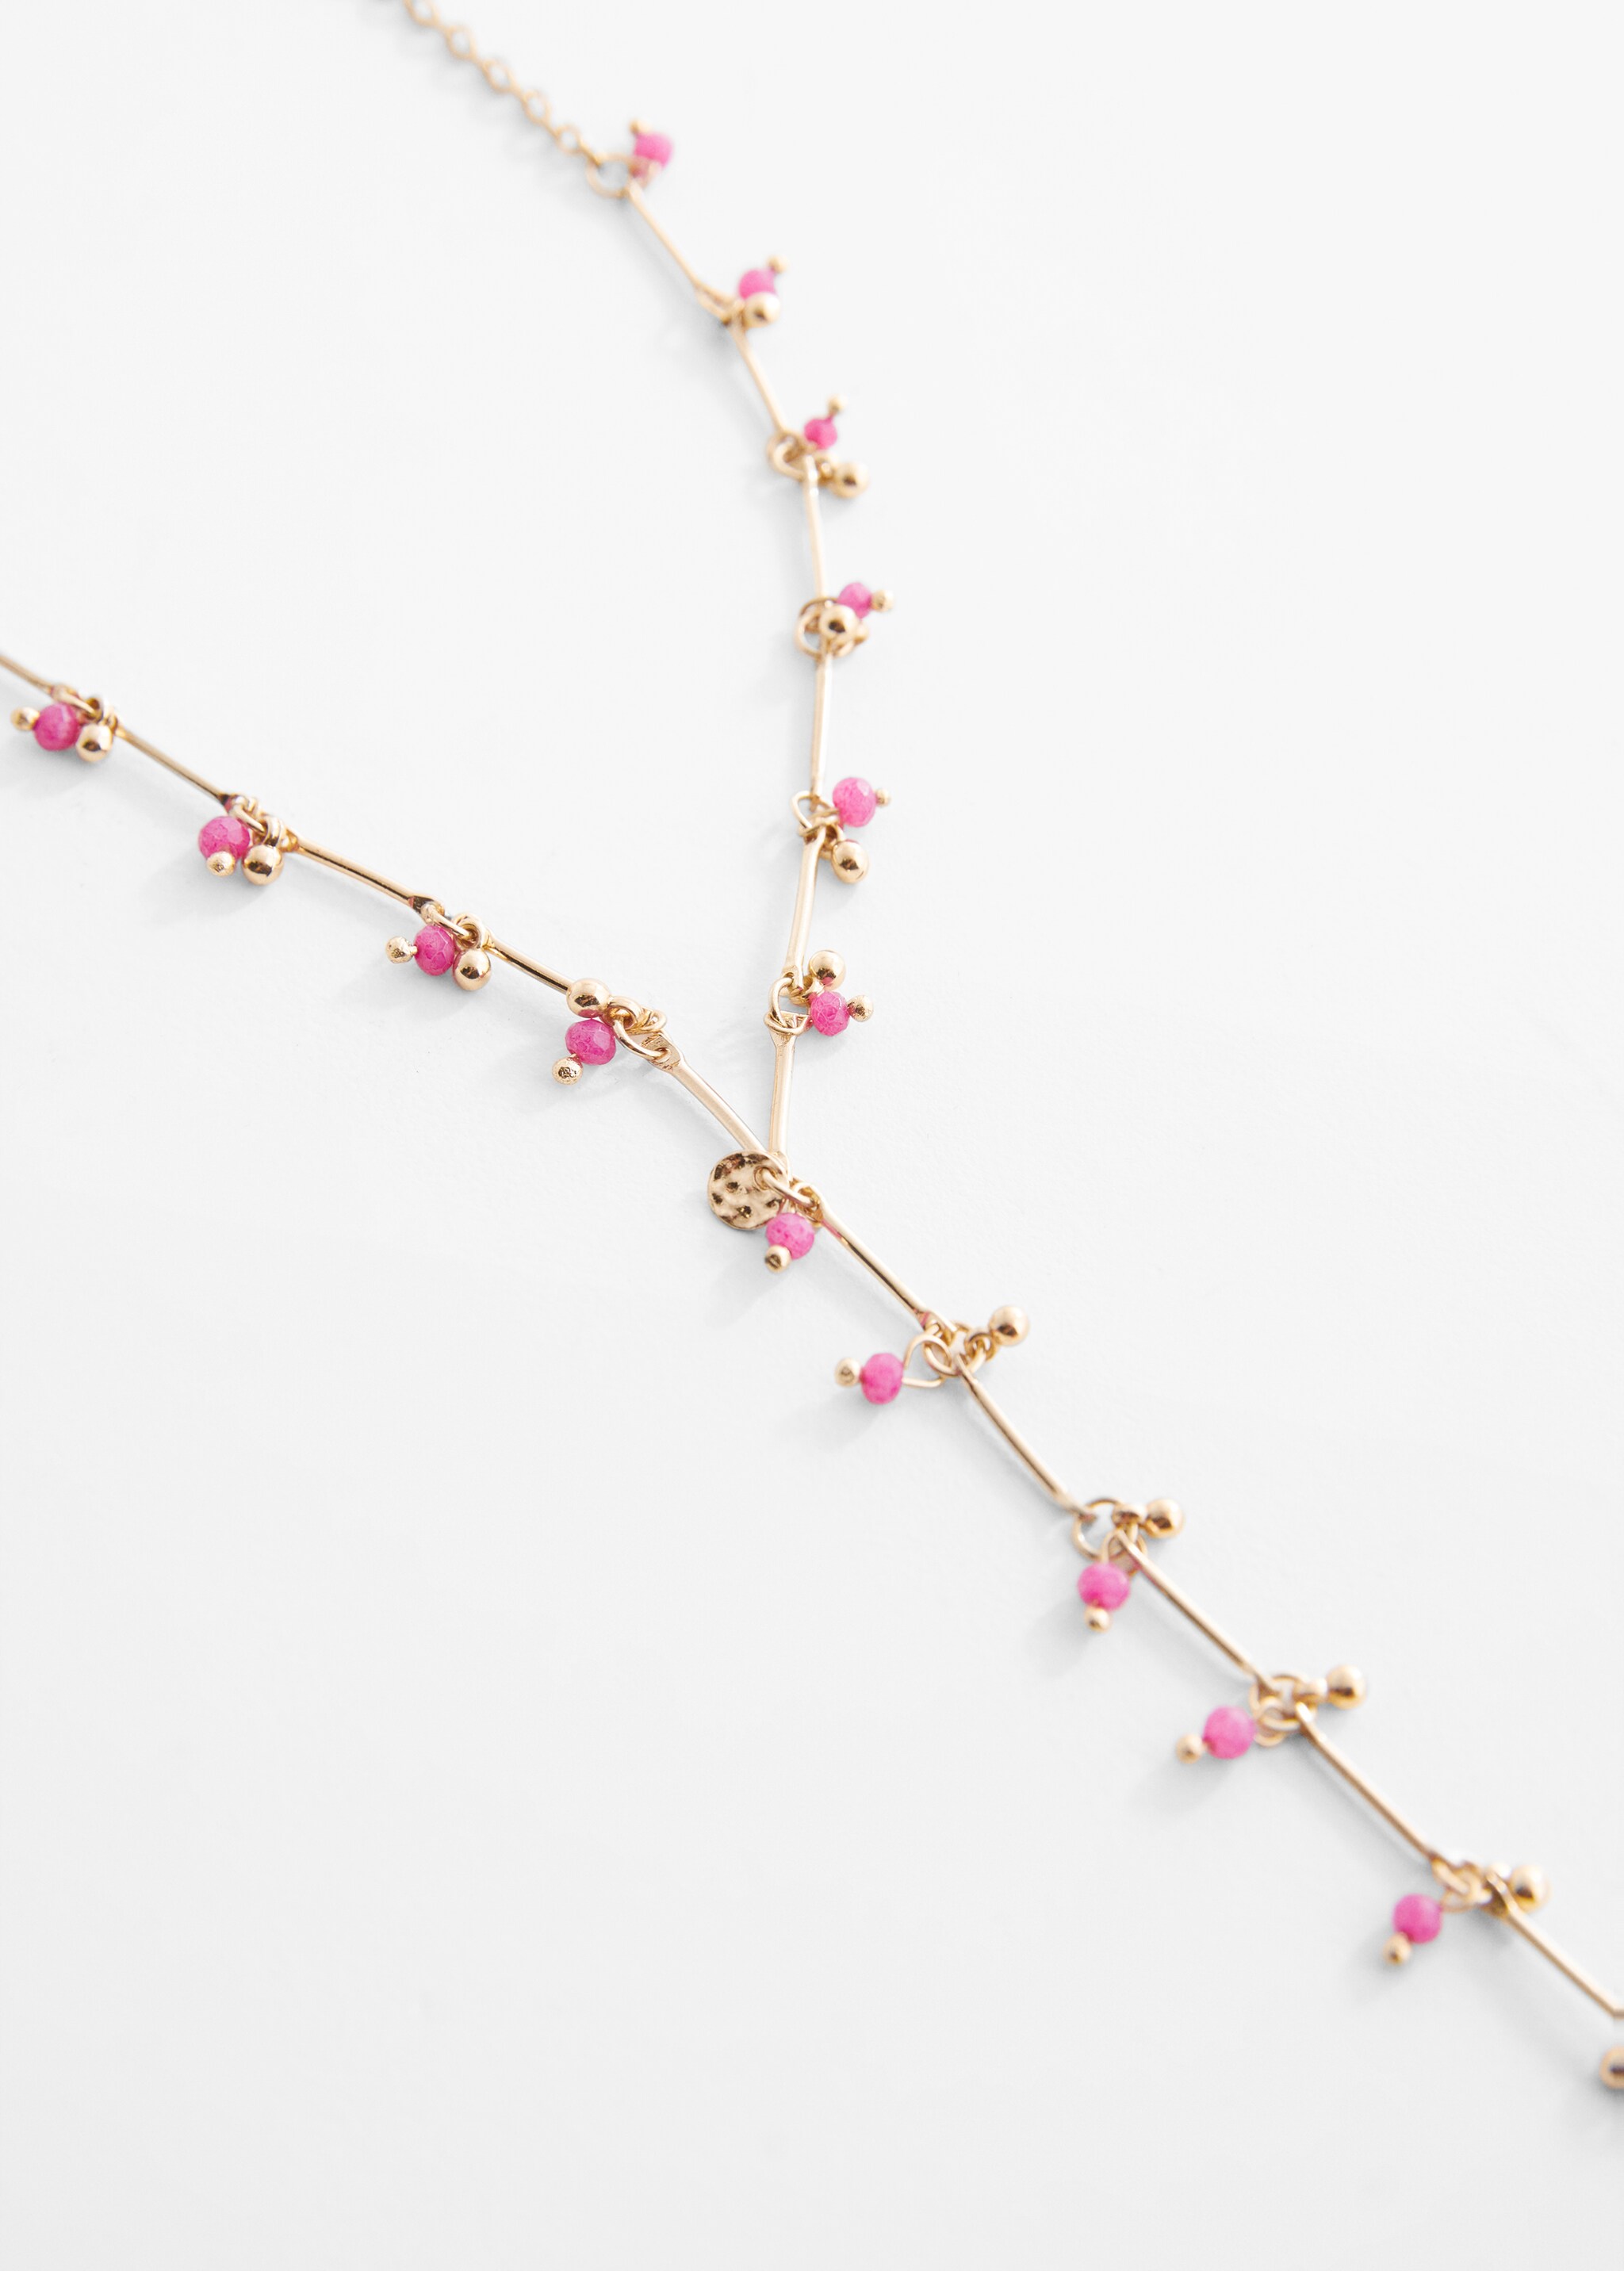 Crystal bead necklace - Medium plane